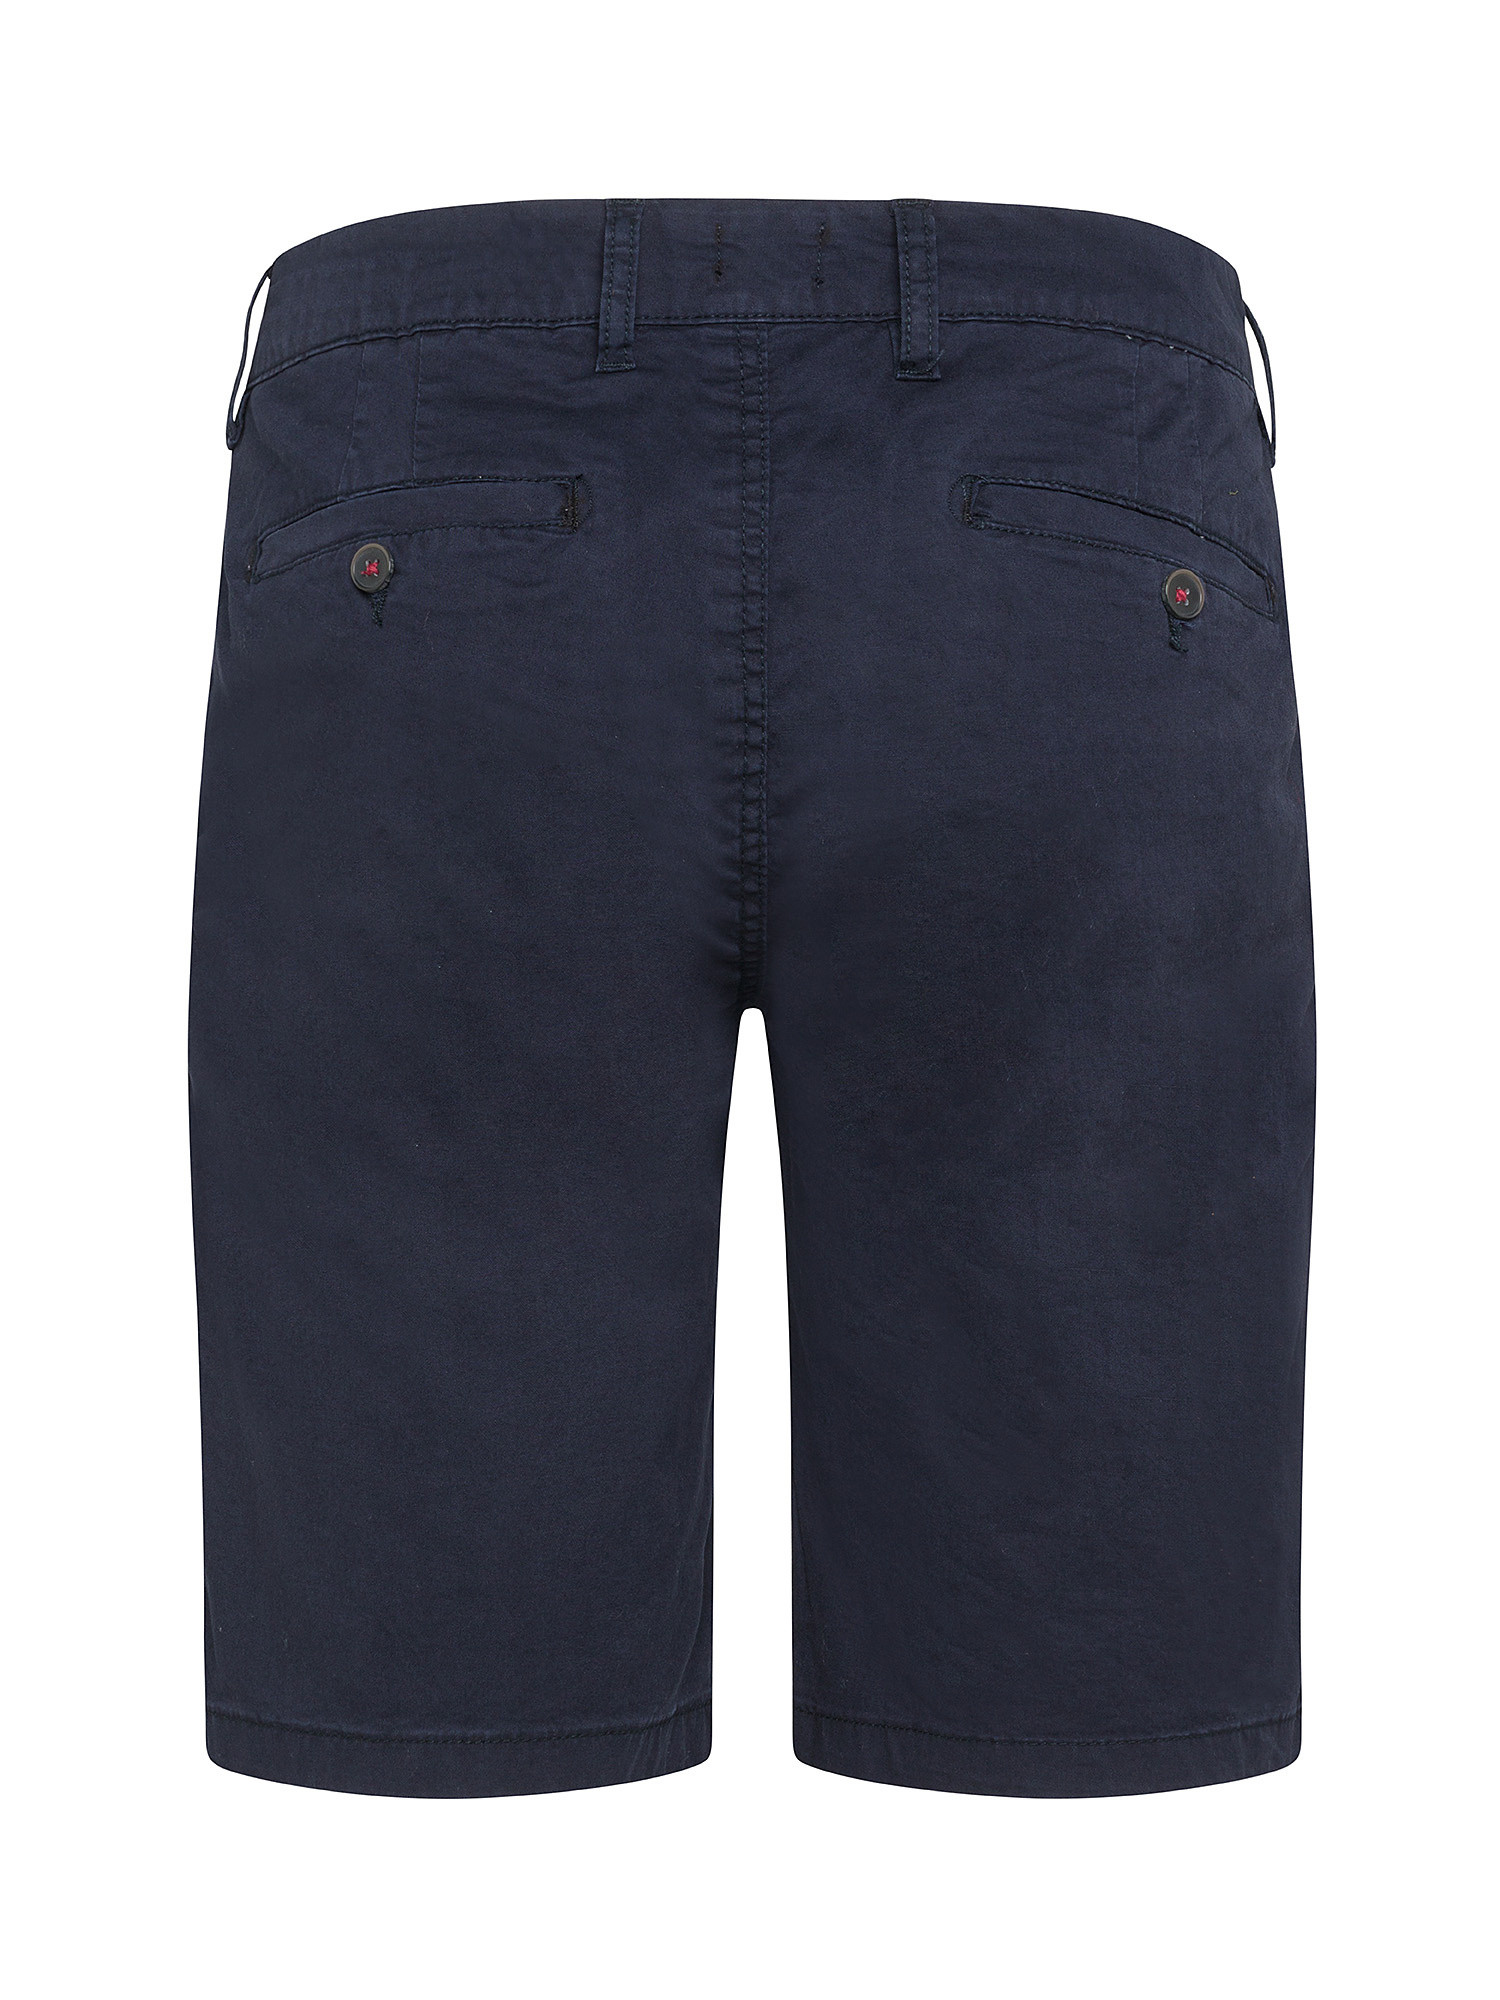 JCT - Bermuda shorts in stretch cotton, Dark Blue, large image number 1